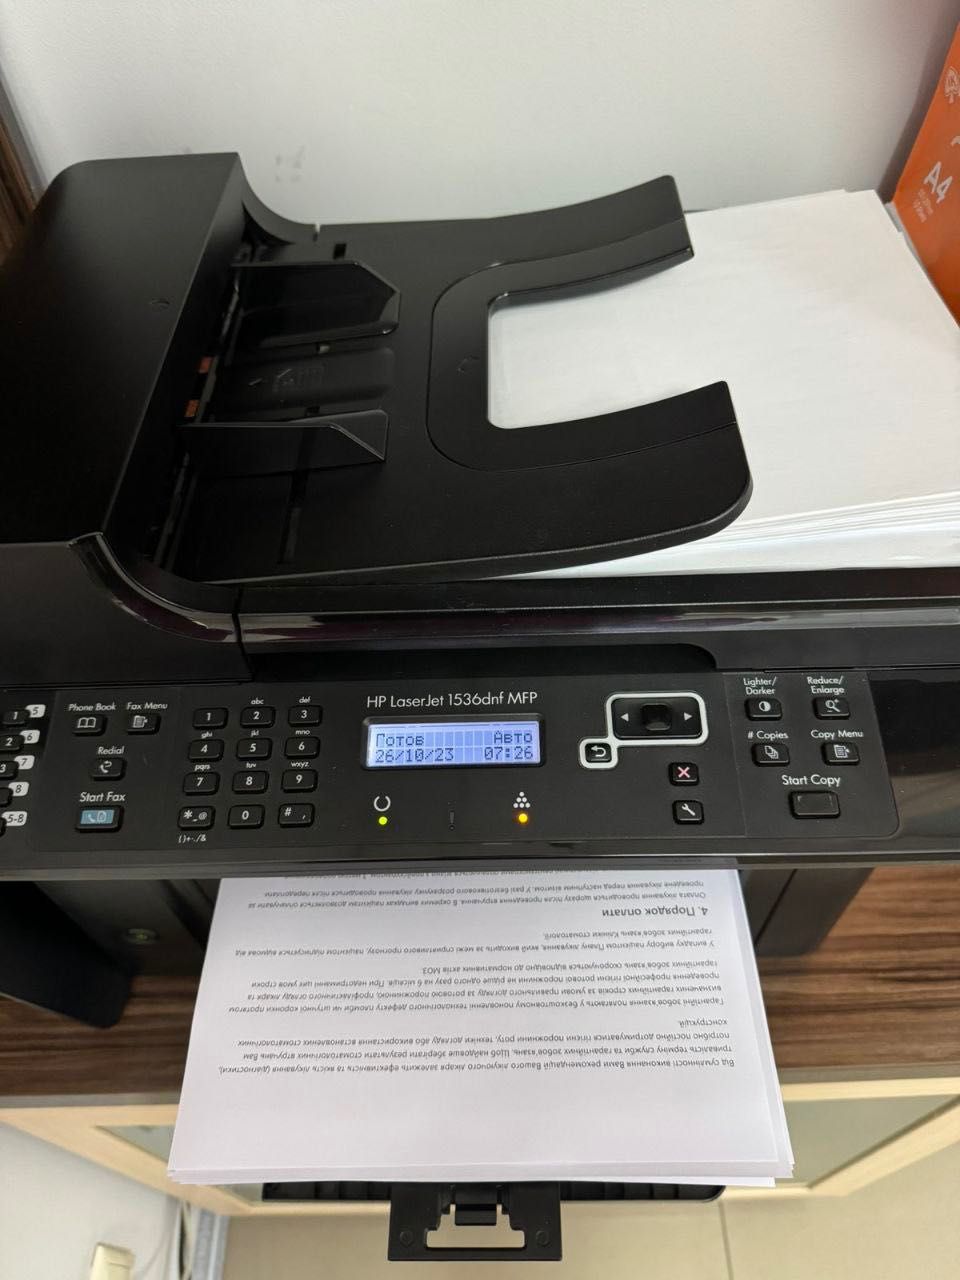 Принтер HP LJ 1536 dfn MP